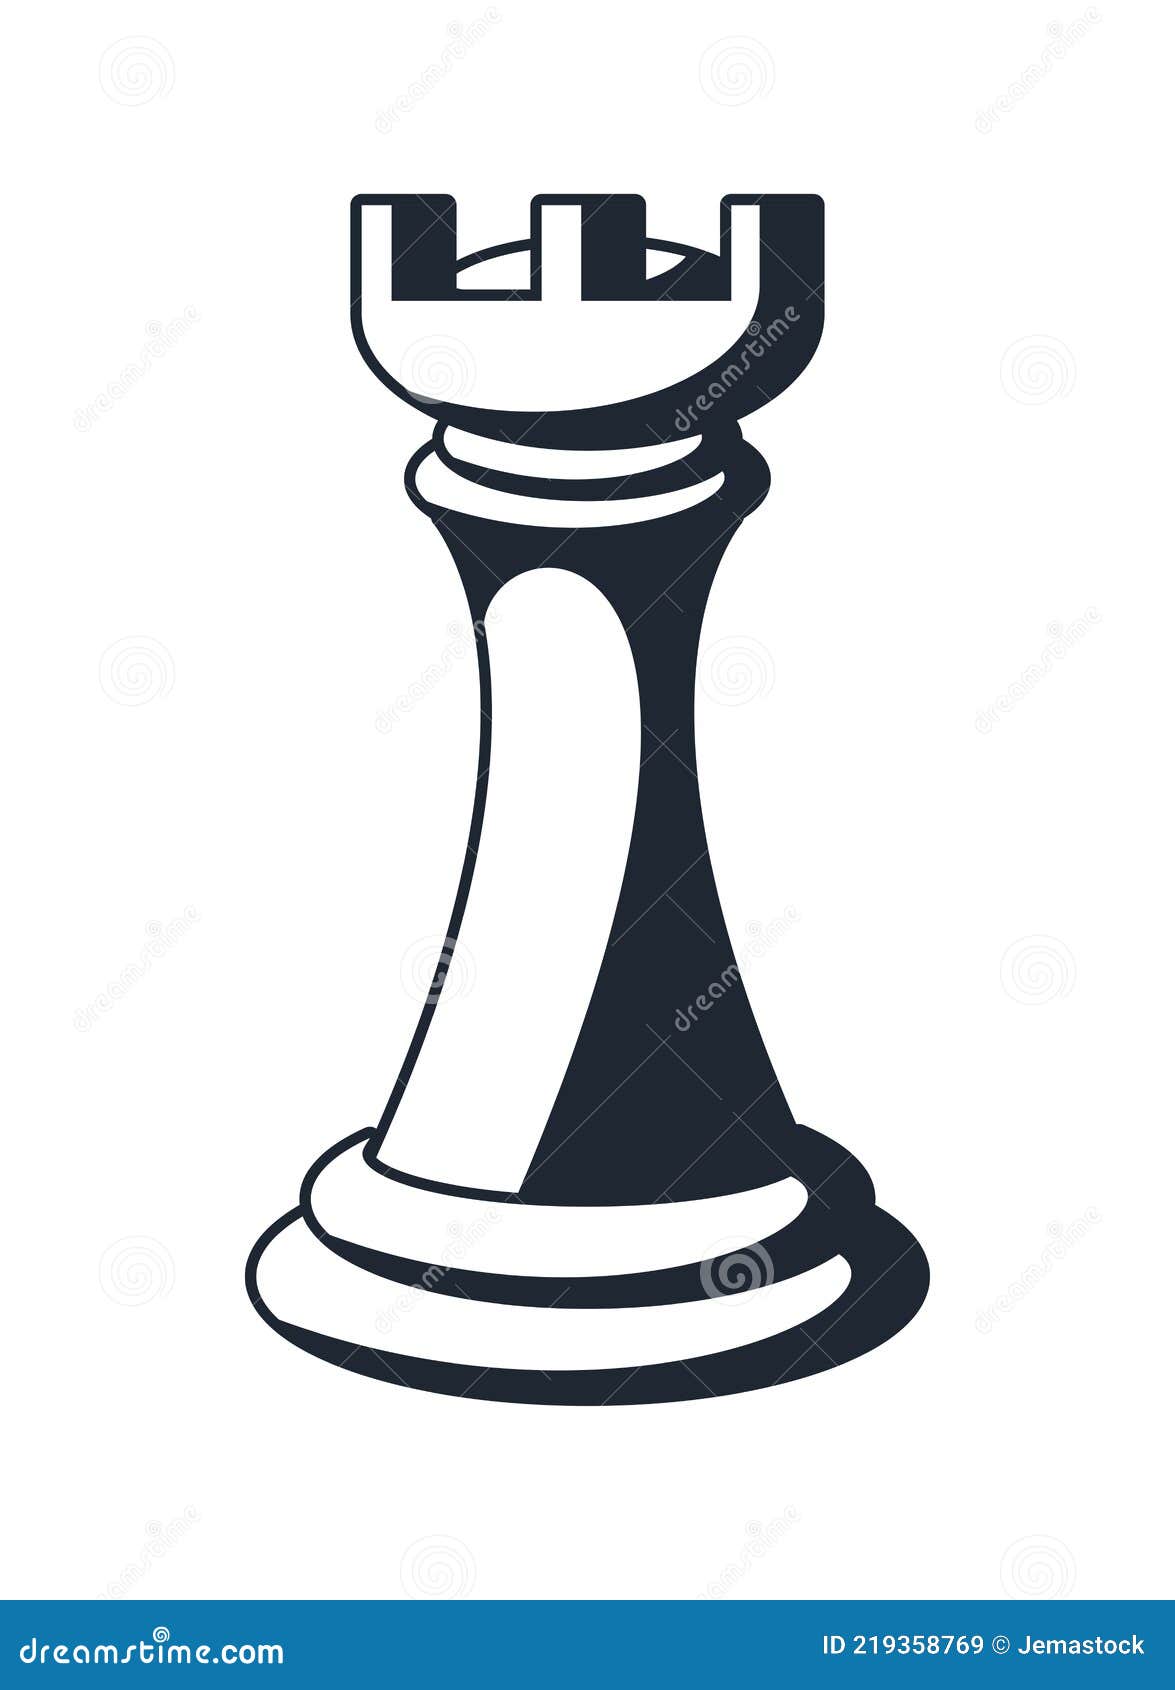 design de ícone criativo de torres de xadrez 14965108 Vetor no Vecteezy